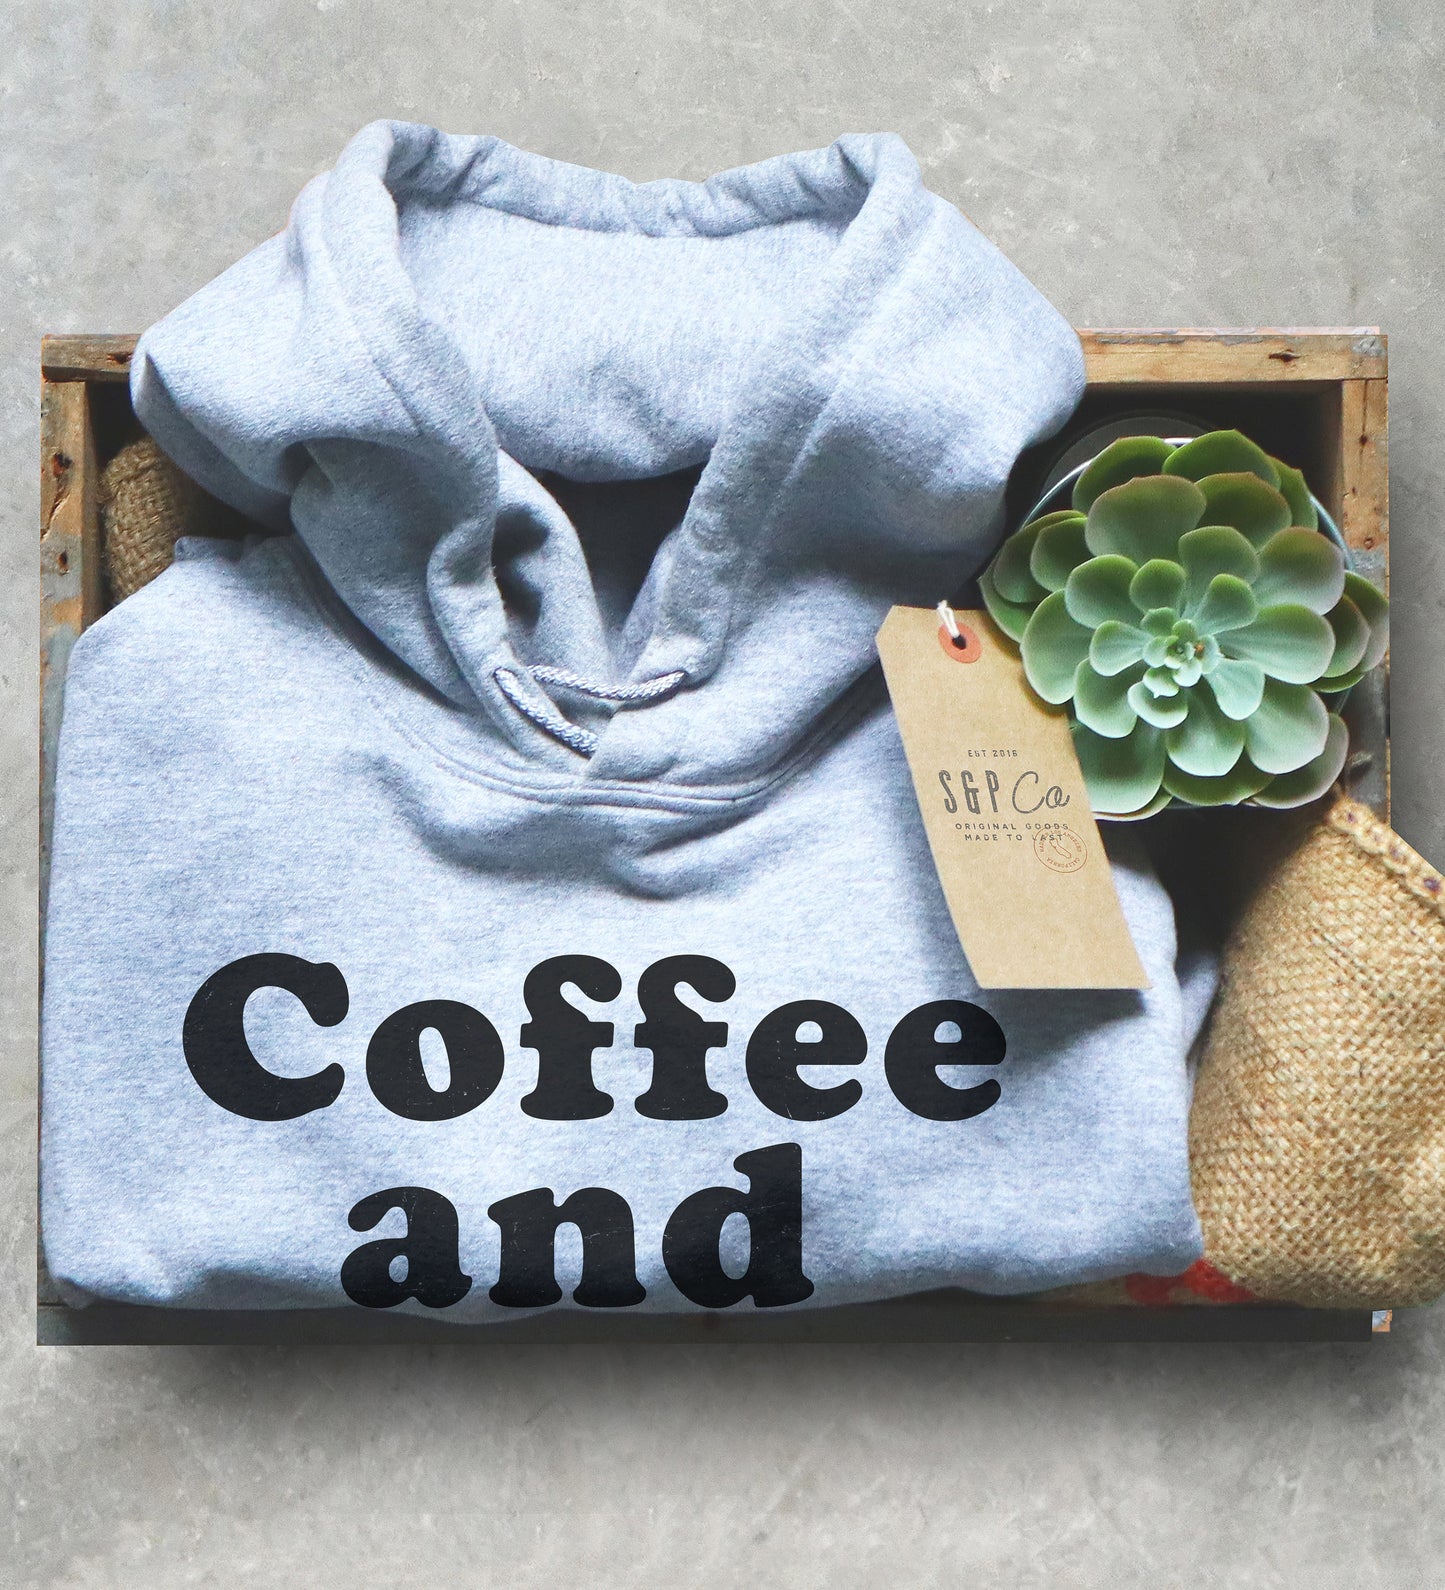 Coffee and Editing Unisex Hoodie - Photographer Shirt, Photography Gift, Editor Shirt, Blogger Shirt, Influencer Shirt, Edit Day, Camera Tee